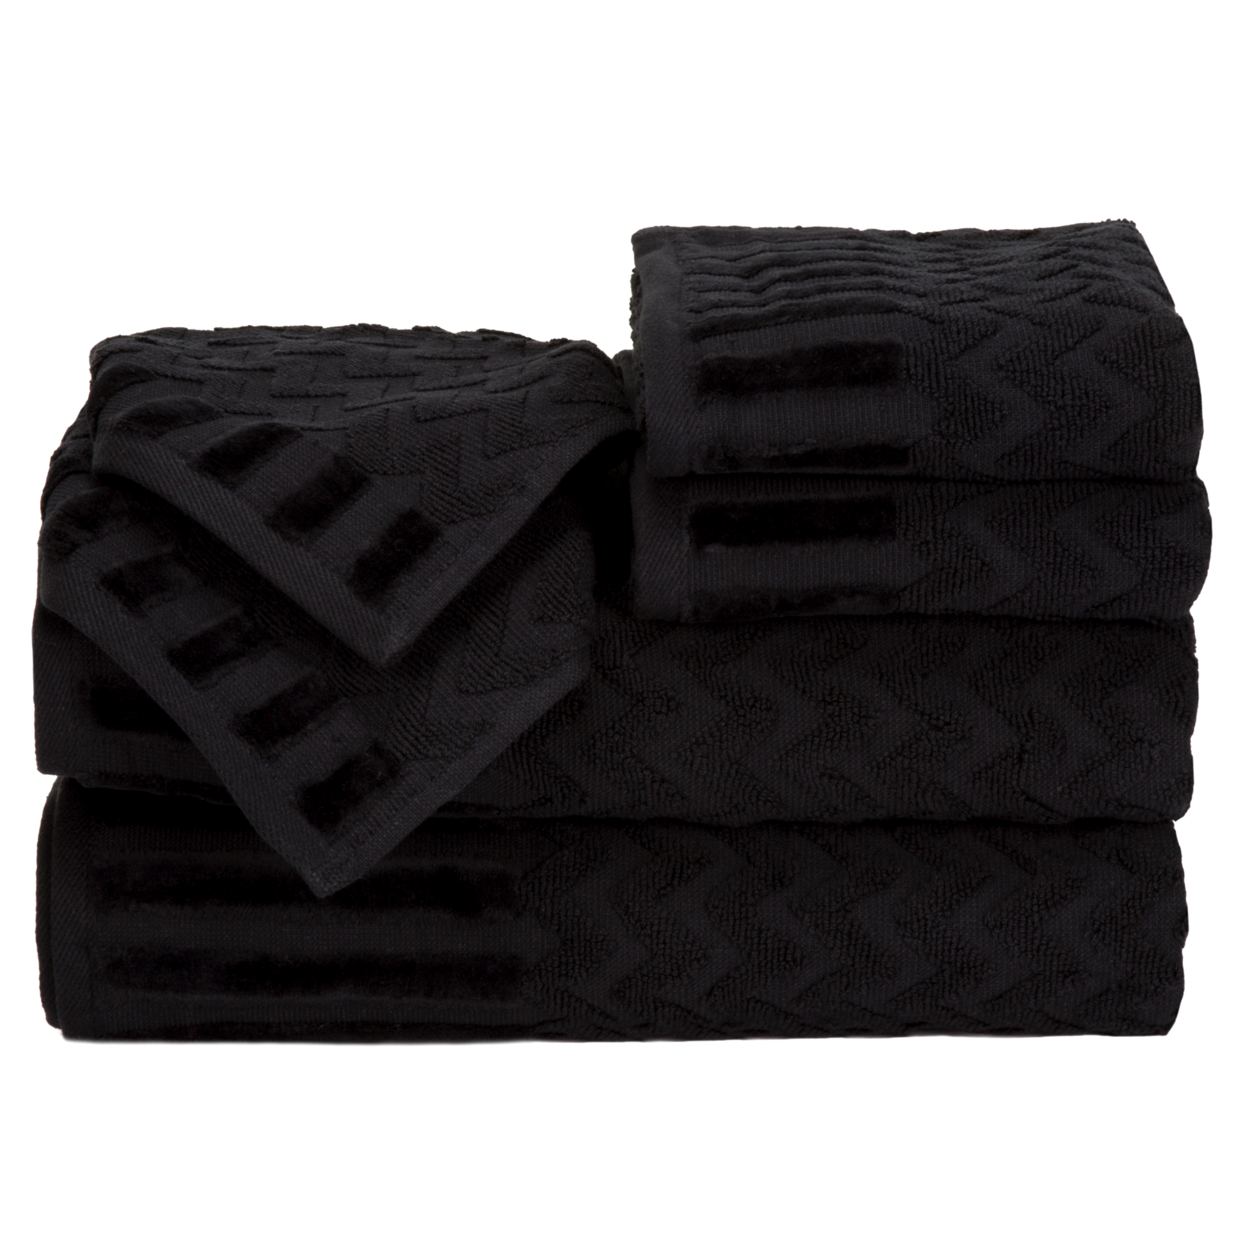 6 Pc Black Cotton Deluxe Plush Bath Towel Set – Chevron Patterned Plush Sculpted Spa Luxury Decorative Body, Hand And Face Towels